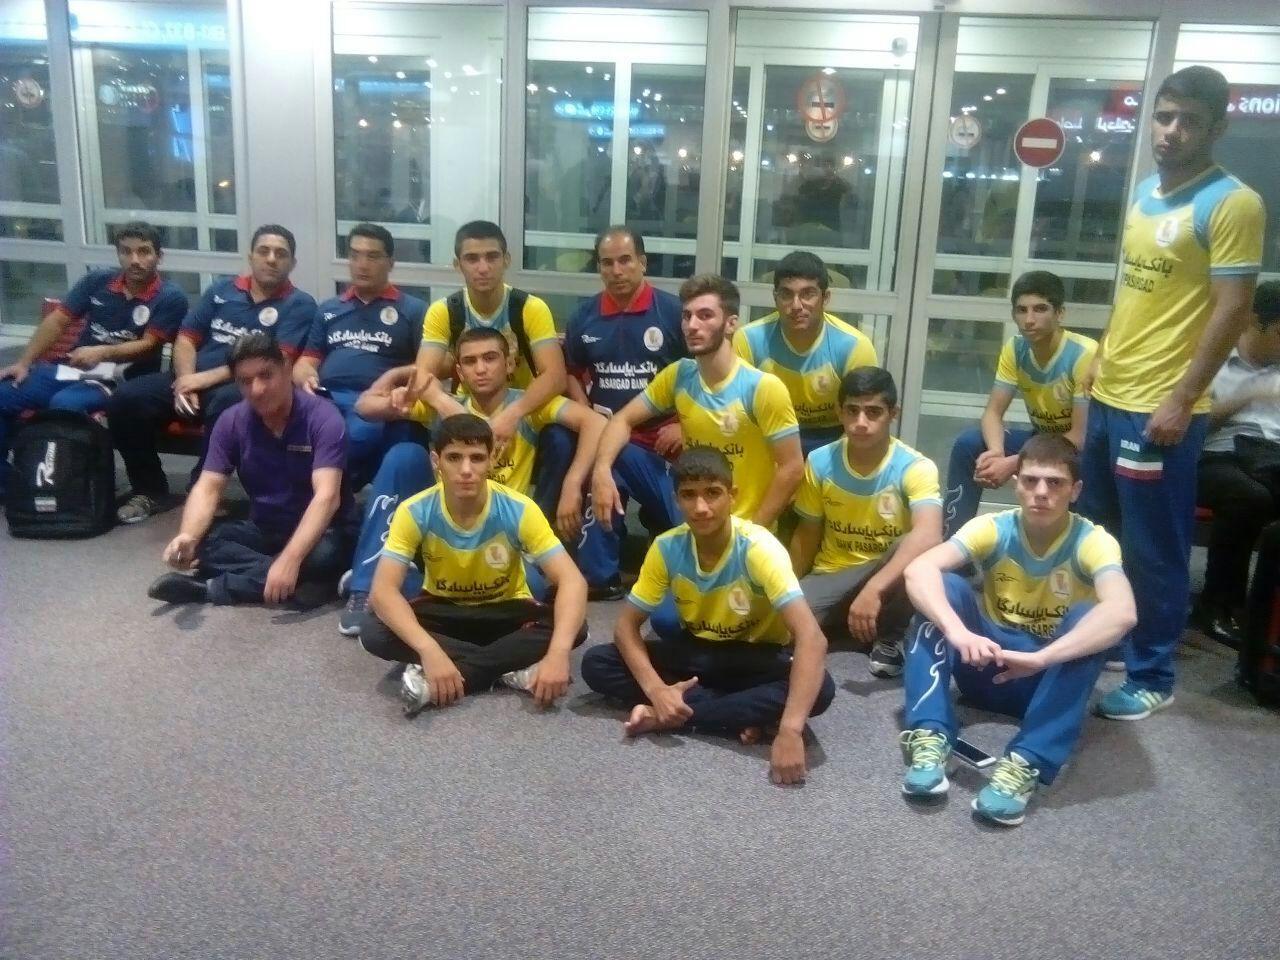 تیم کشتی فرنگی نوجوانان عکس سلفی در فرودگاه دوبی+عکس